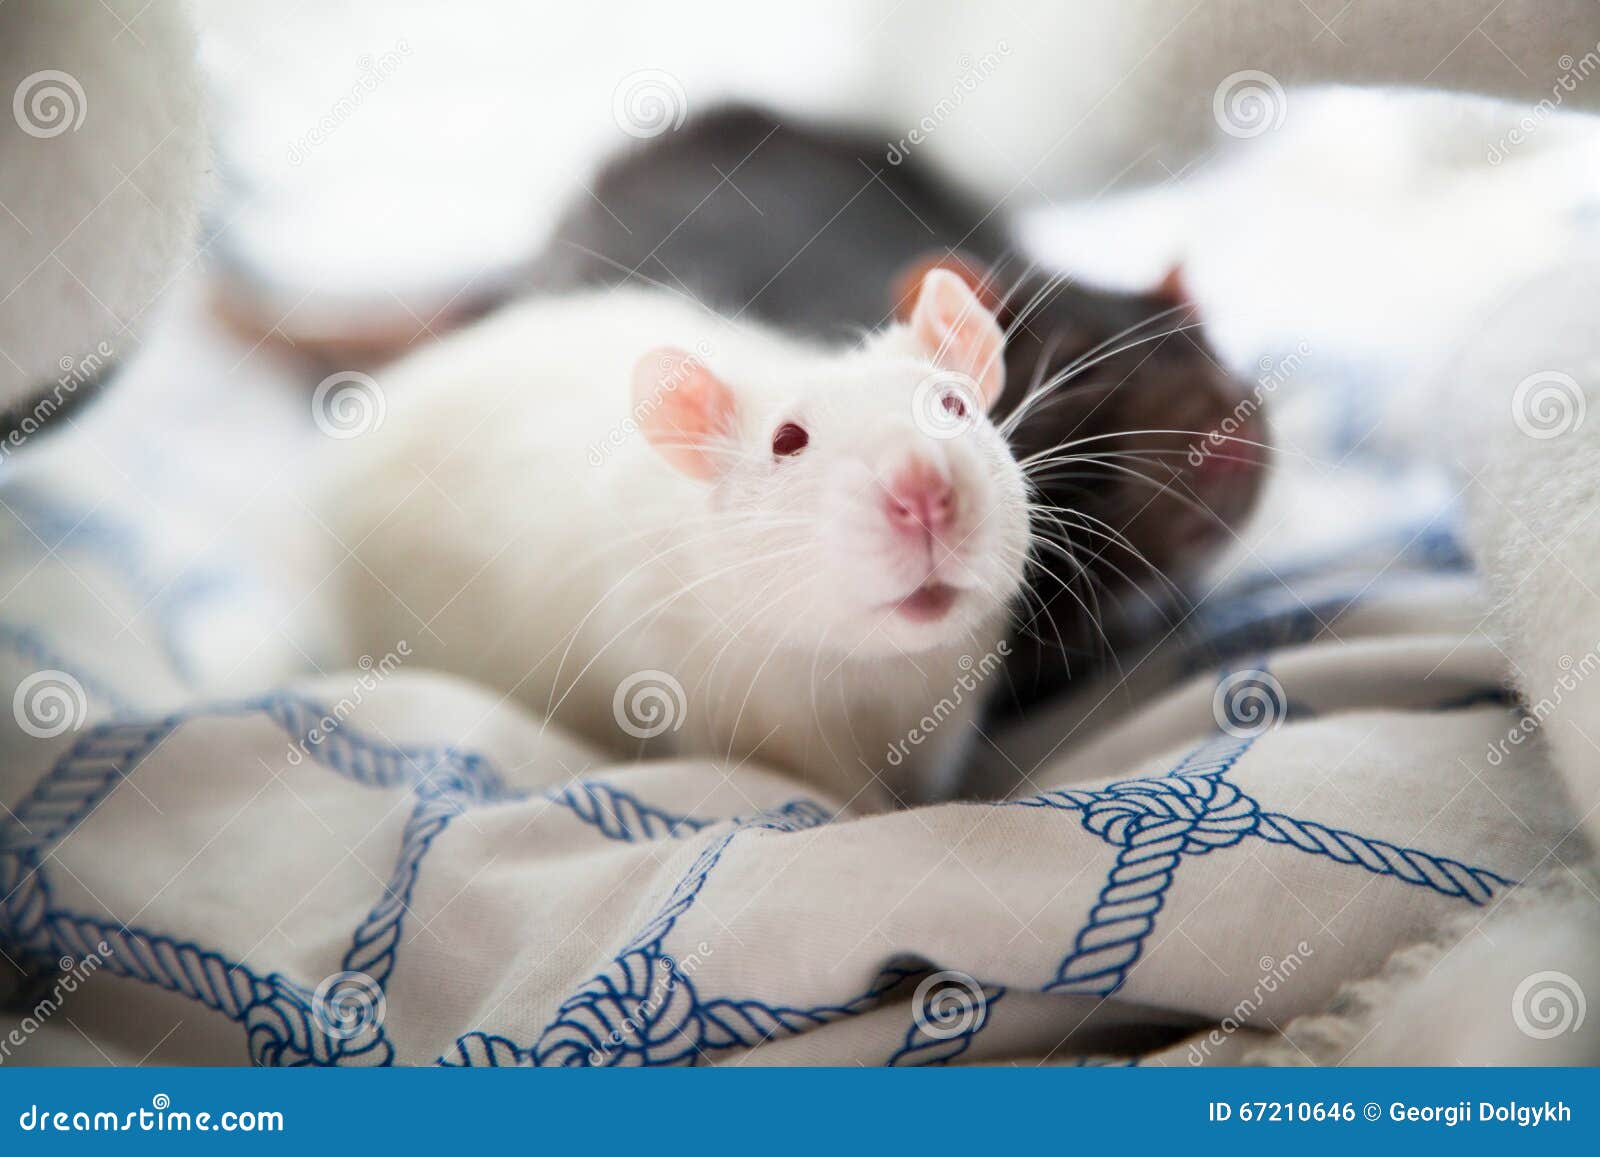 two pet rats